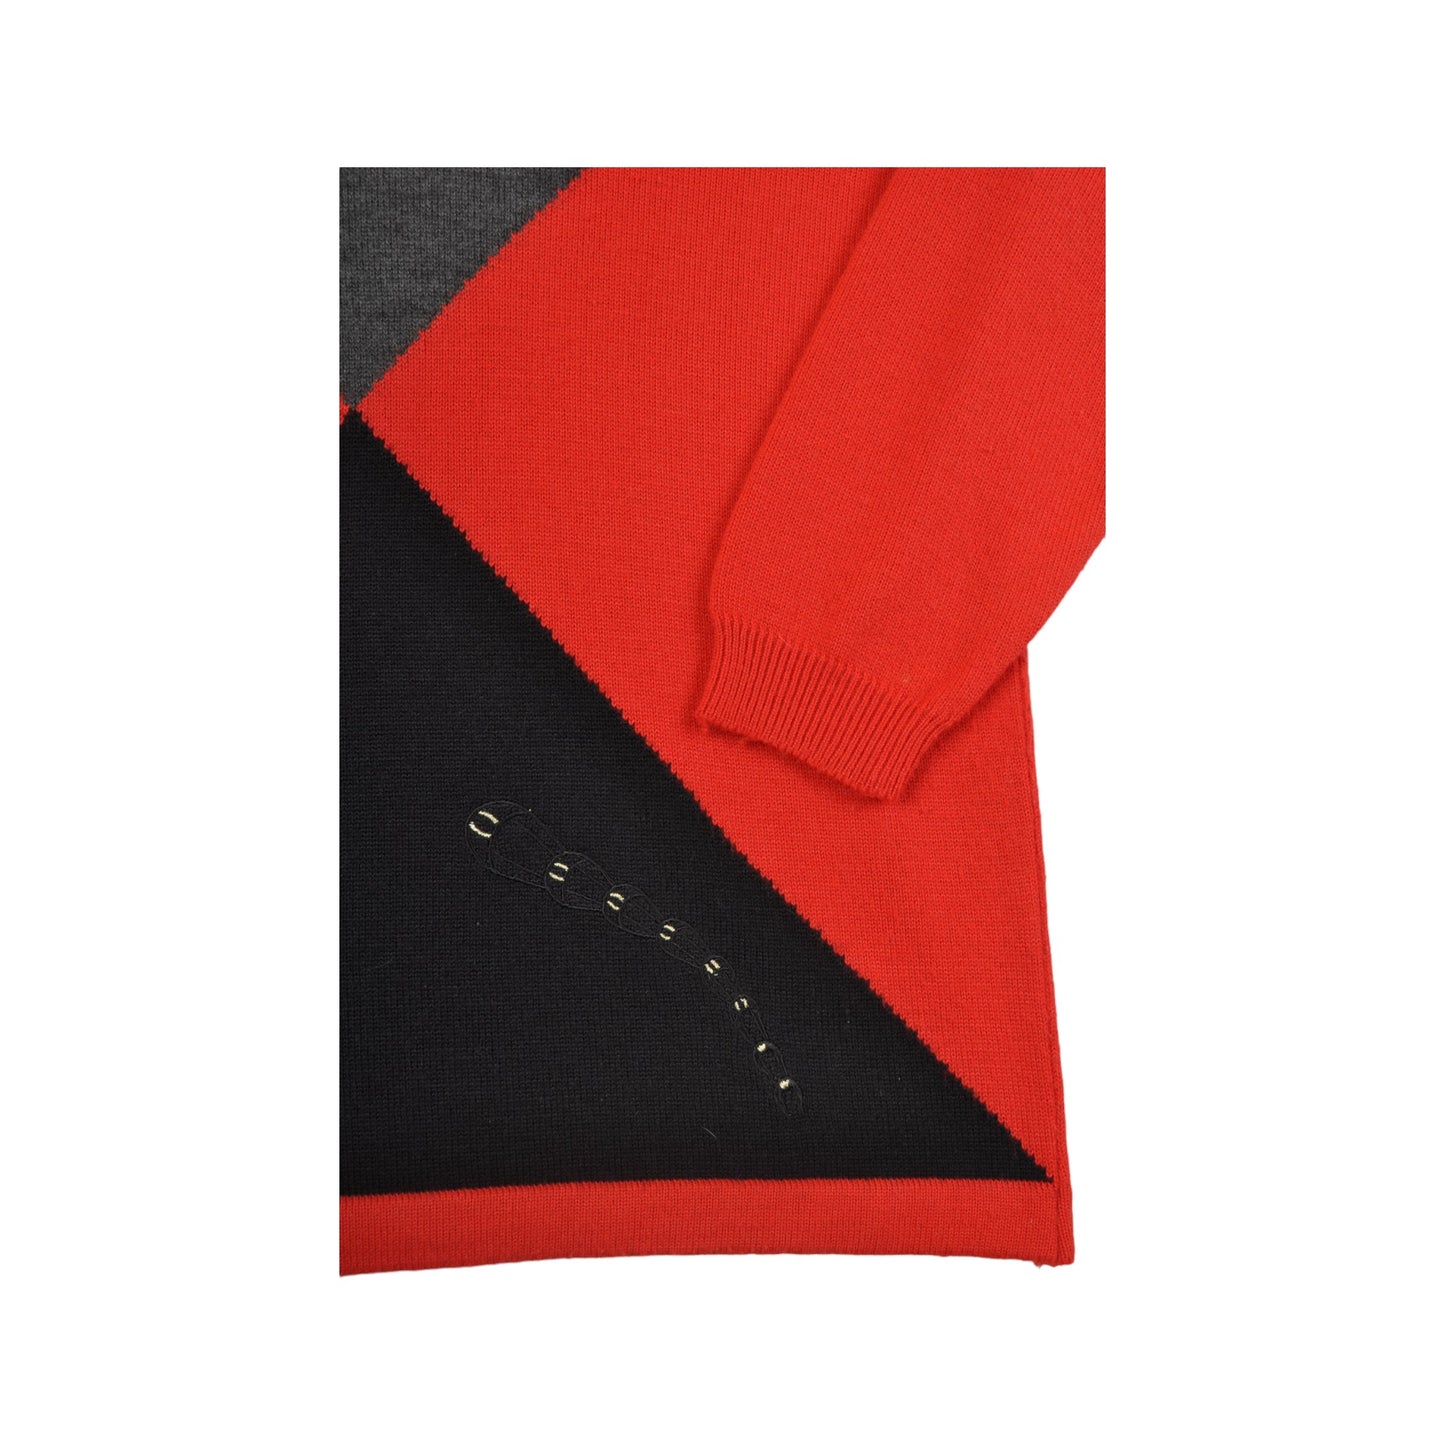 Vintage Knitwear Sweater Retro Pattern Red/Black Ladies Medium